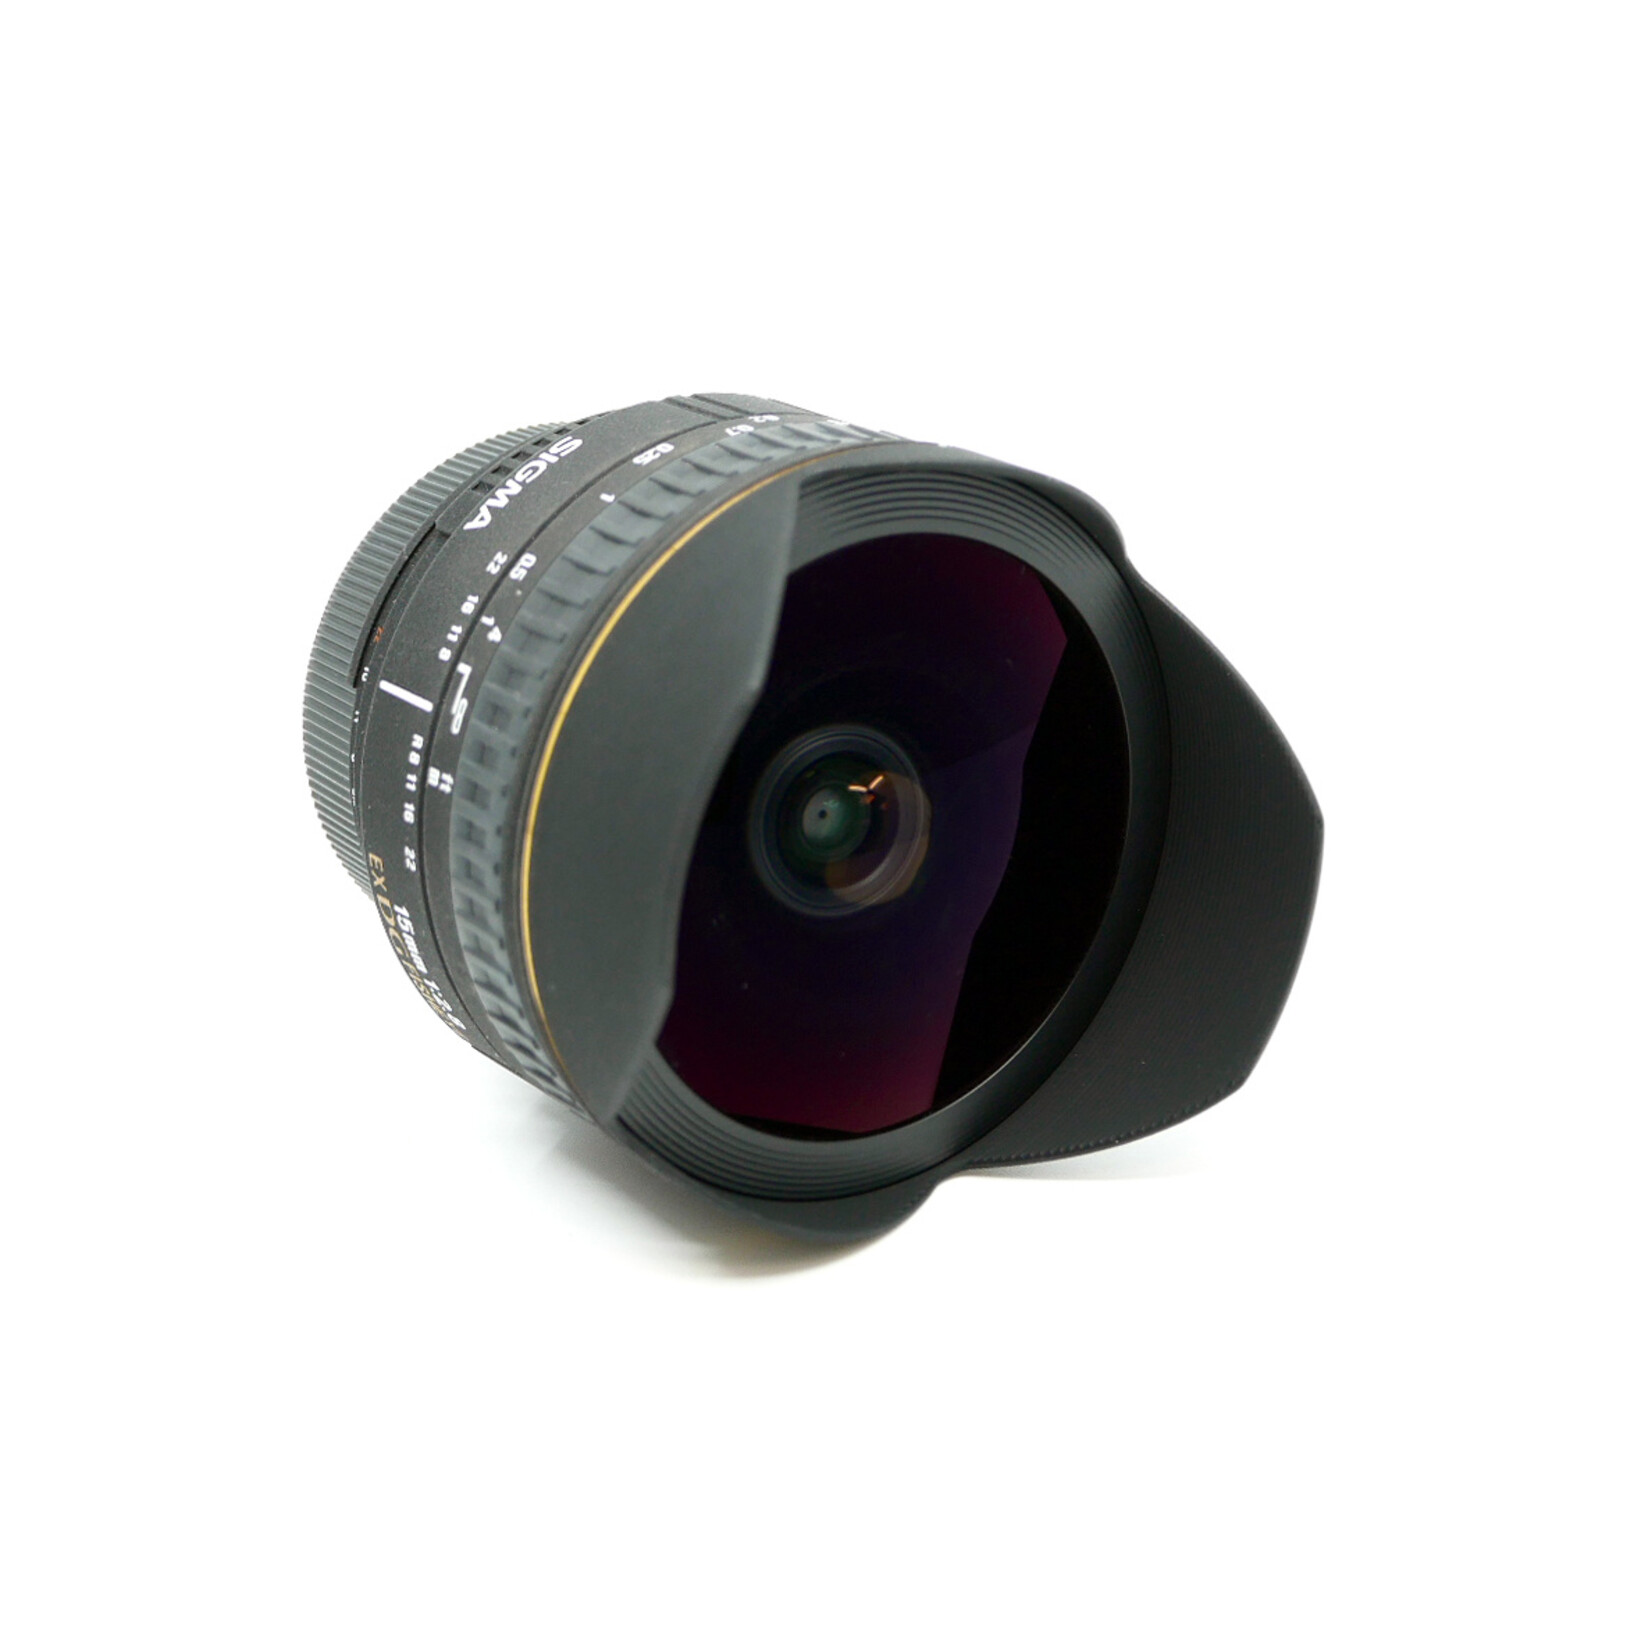 Sigma Sigma 15mm f/2.8 Fisheye EX DG Nikon (USED)